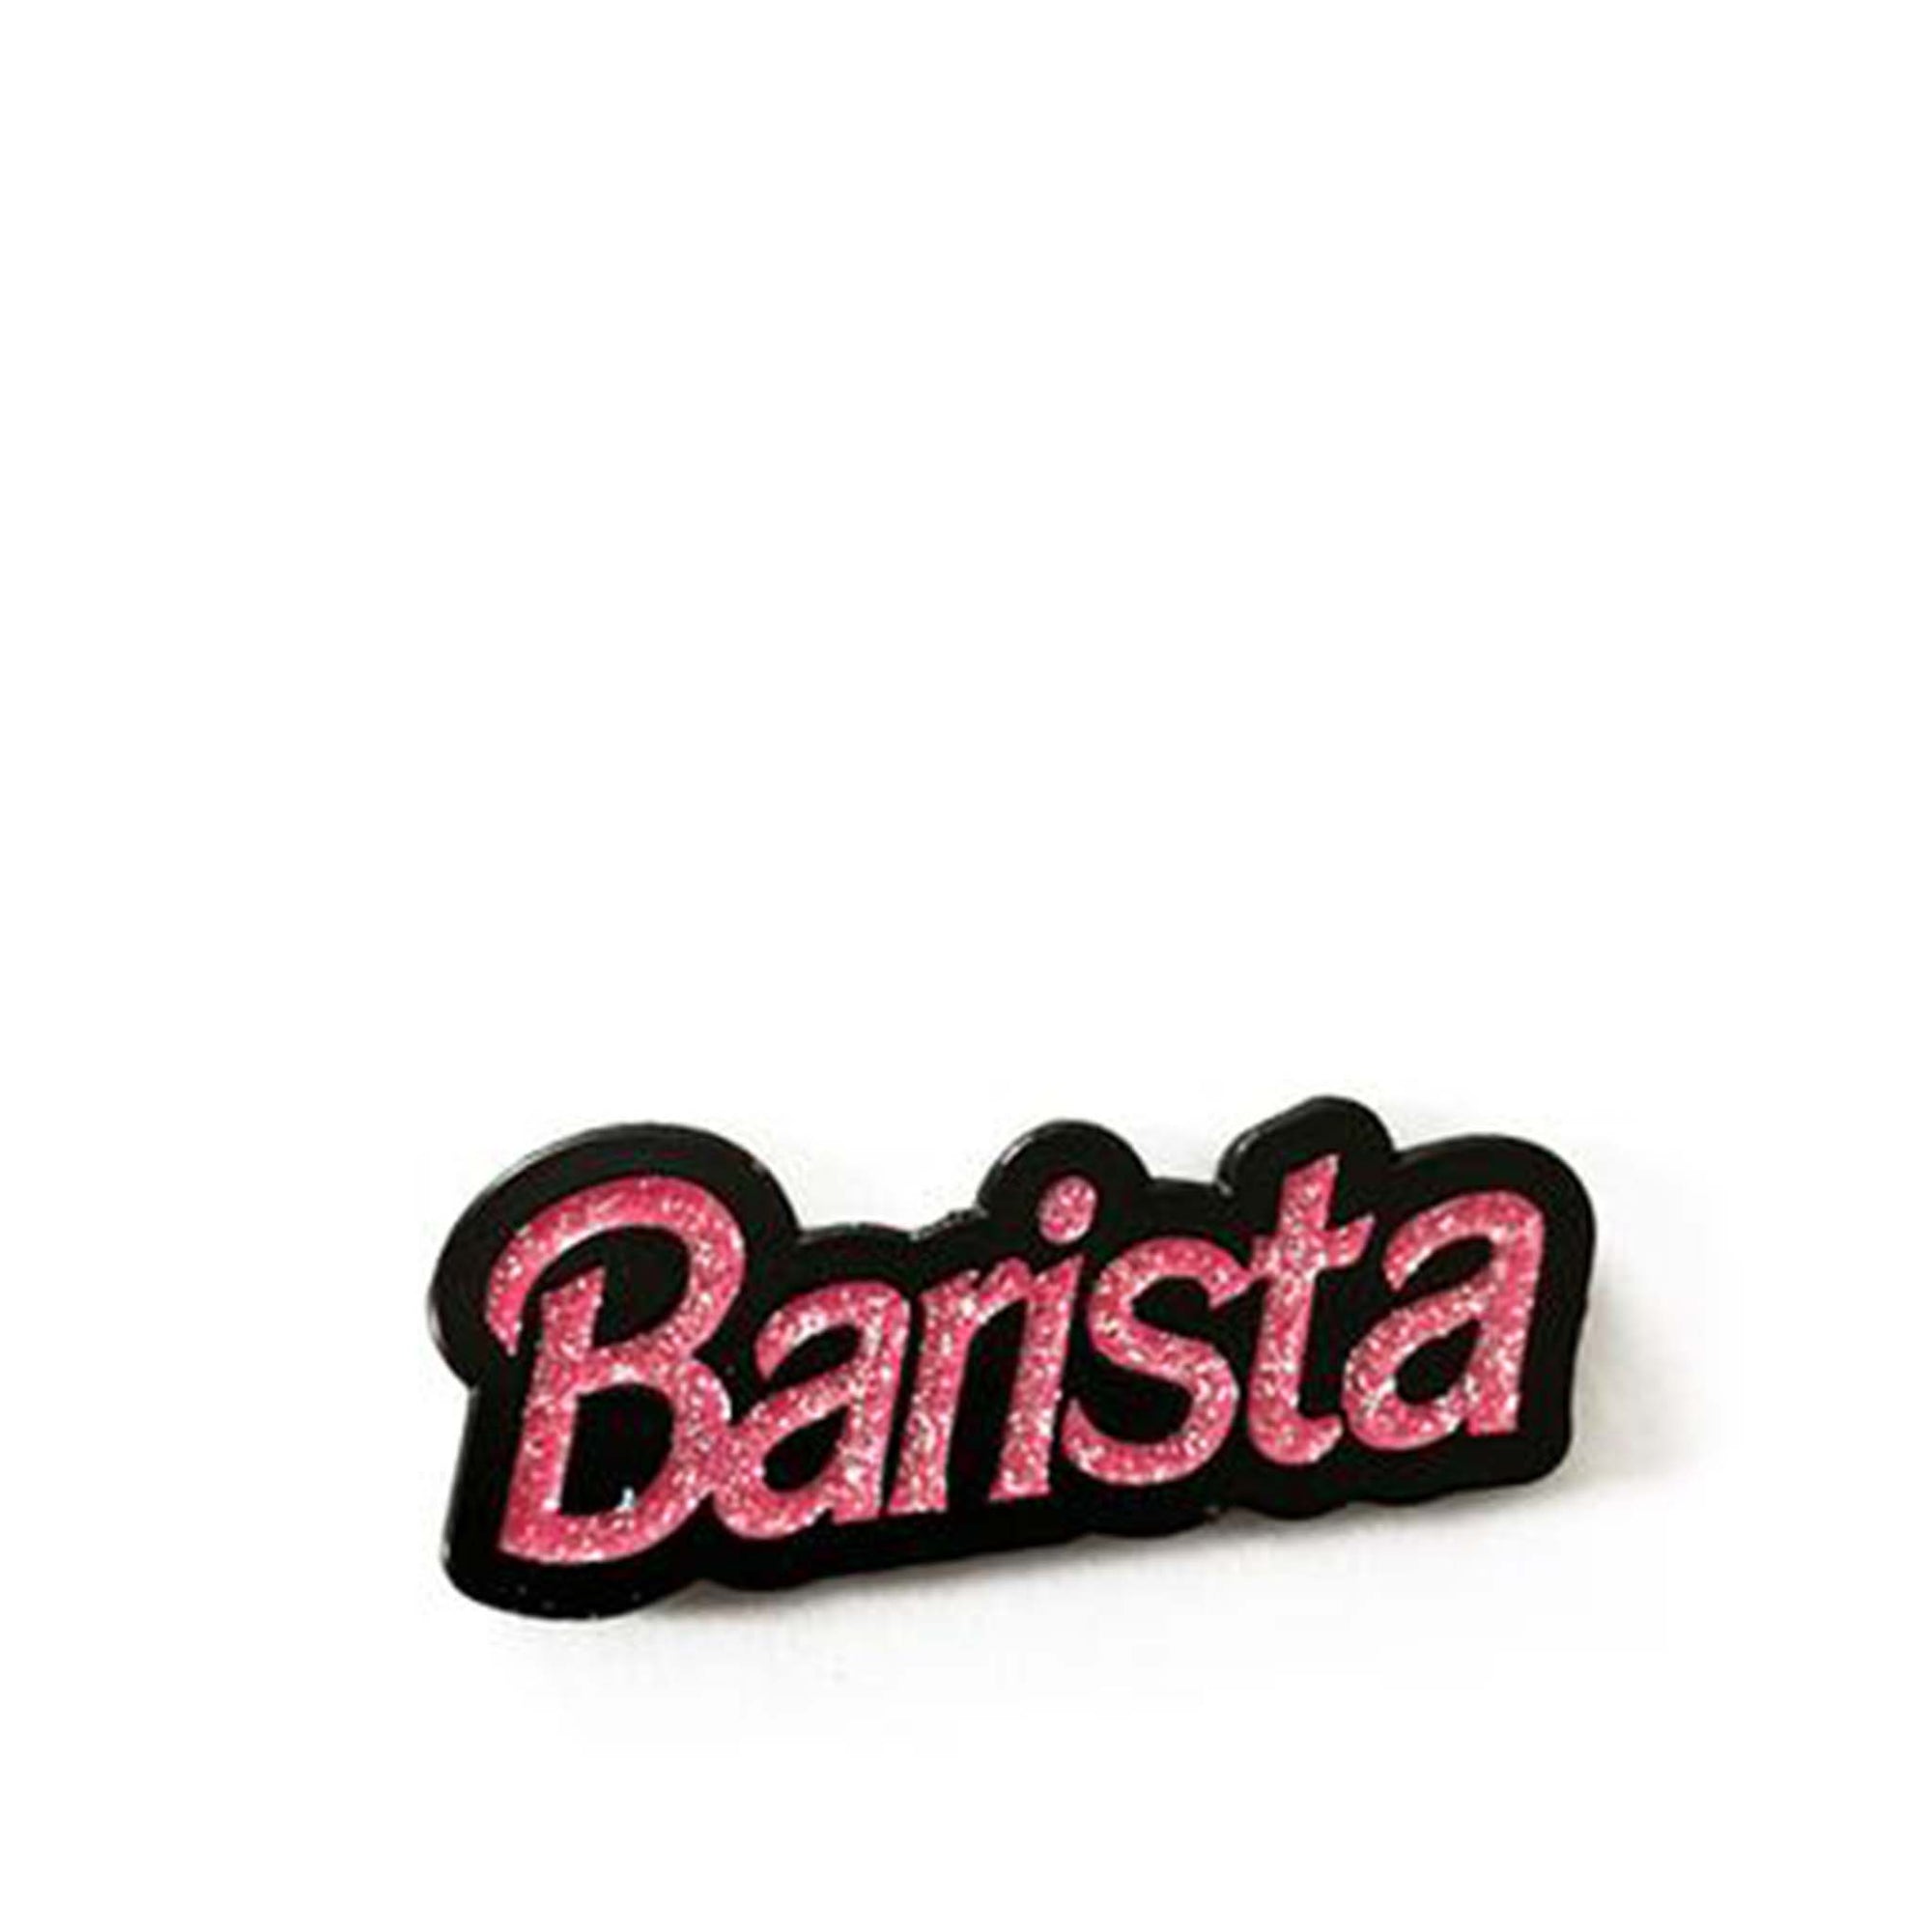 Barbie Barista Pin - Department of Brewology - Espresso Gear